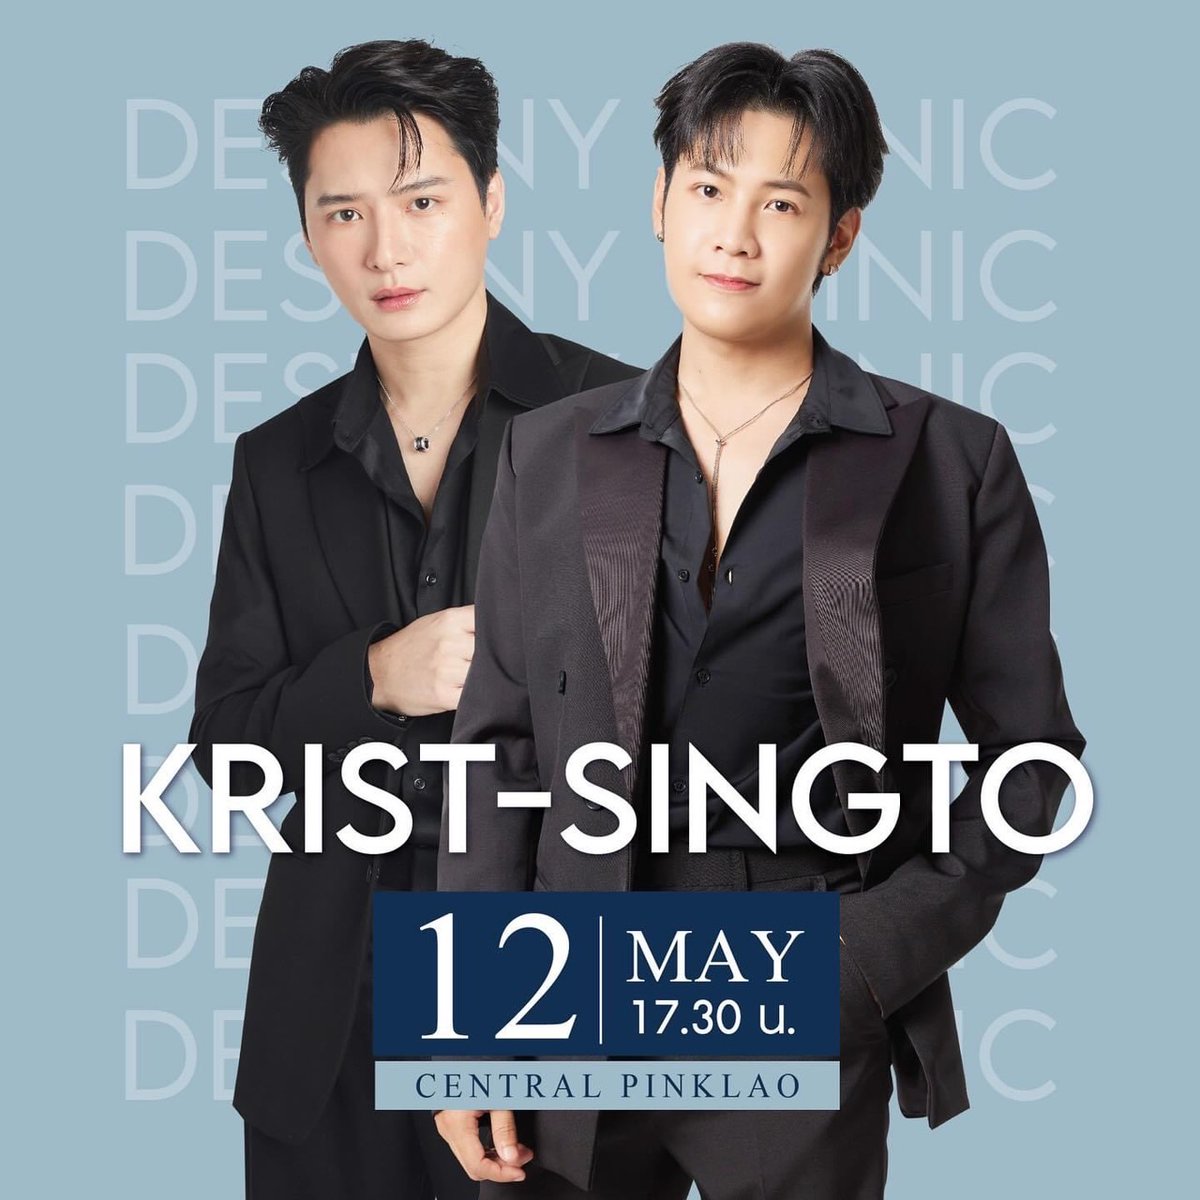 KristSingto's new event with Destiny Clinic 😳❤️

#คริสสิงโต